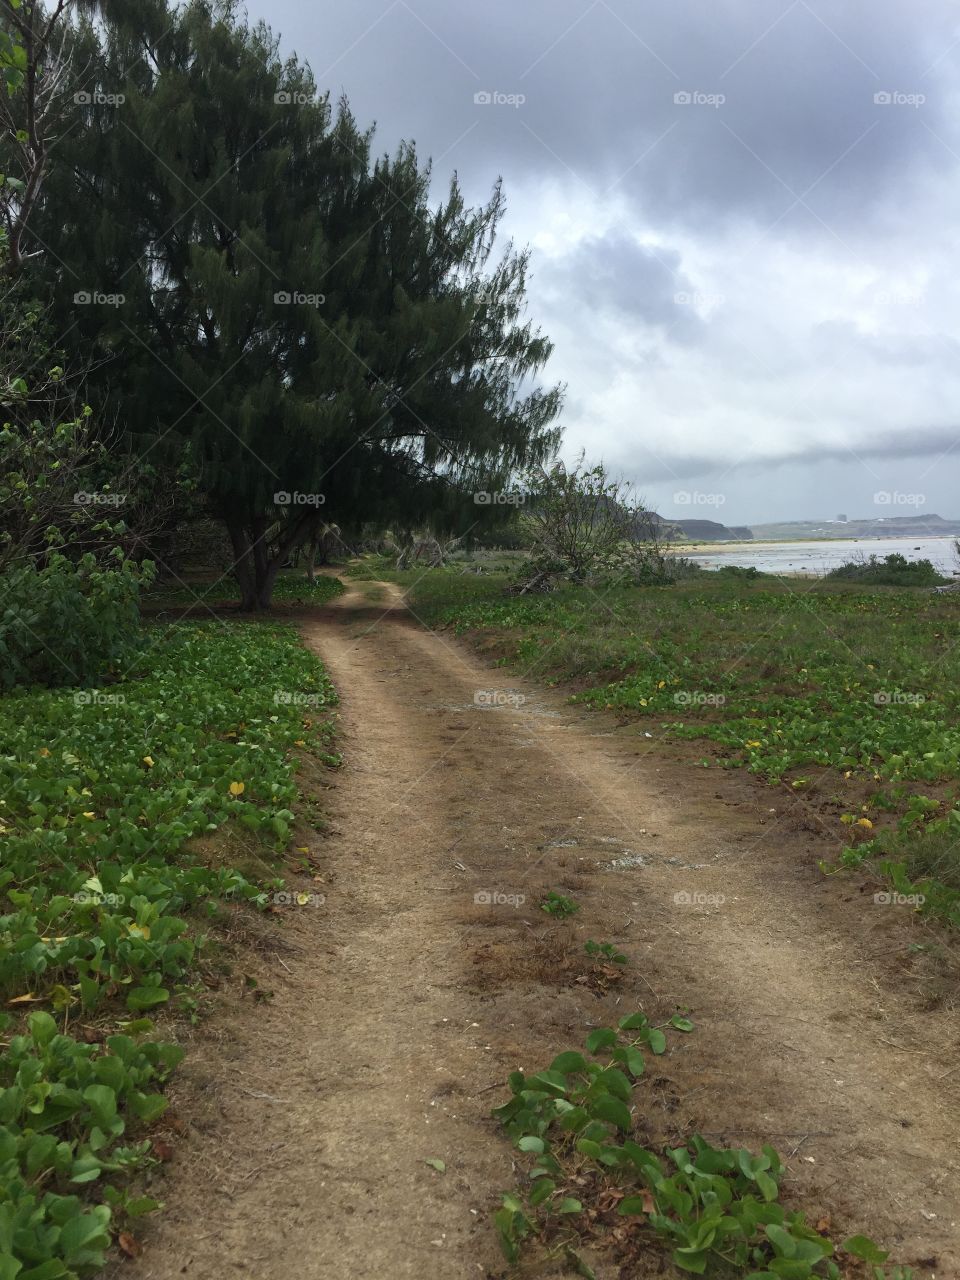 Dirt hiking path along the Quam coast